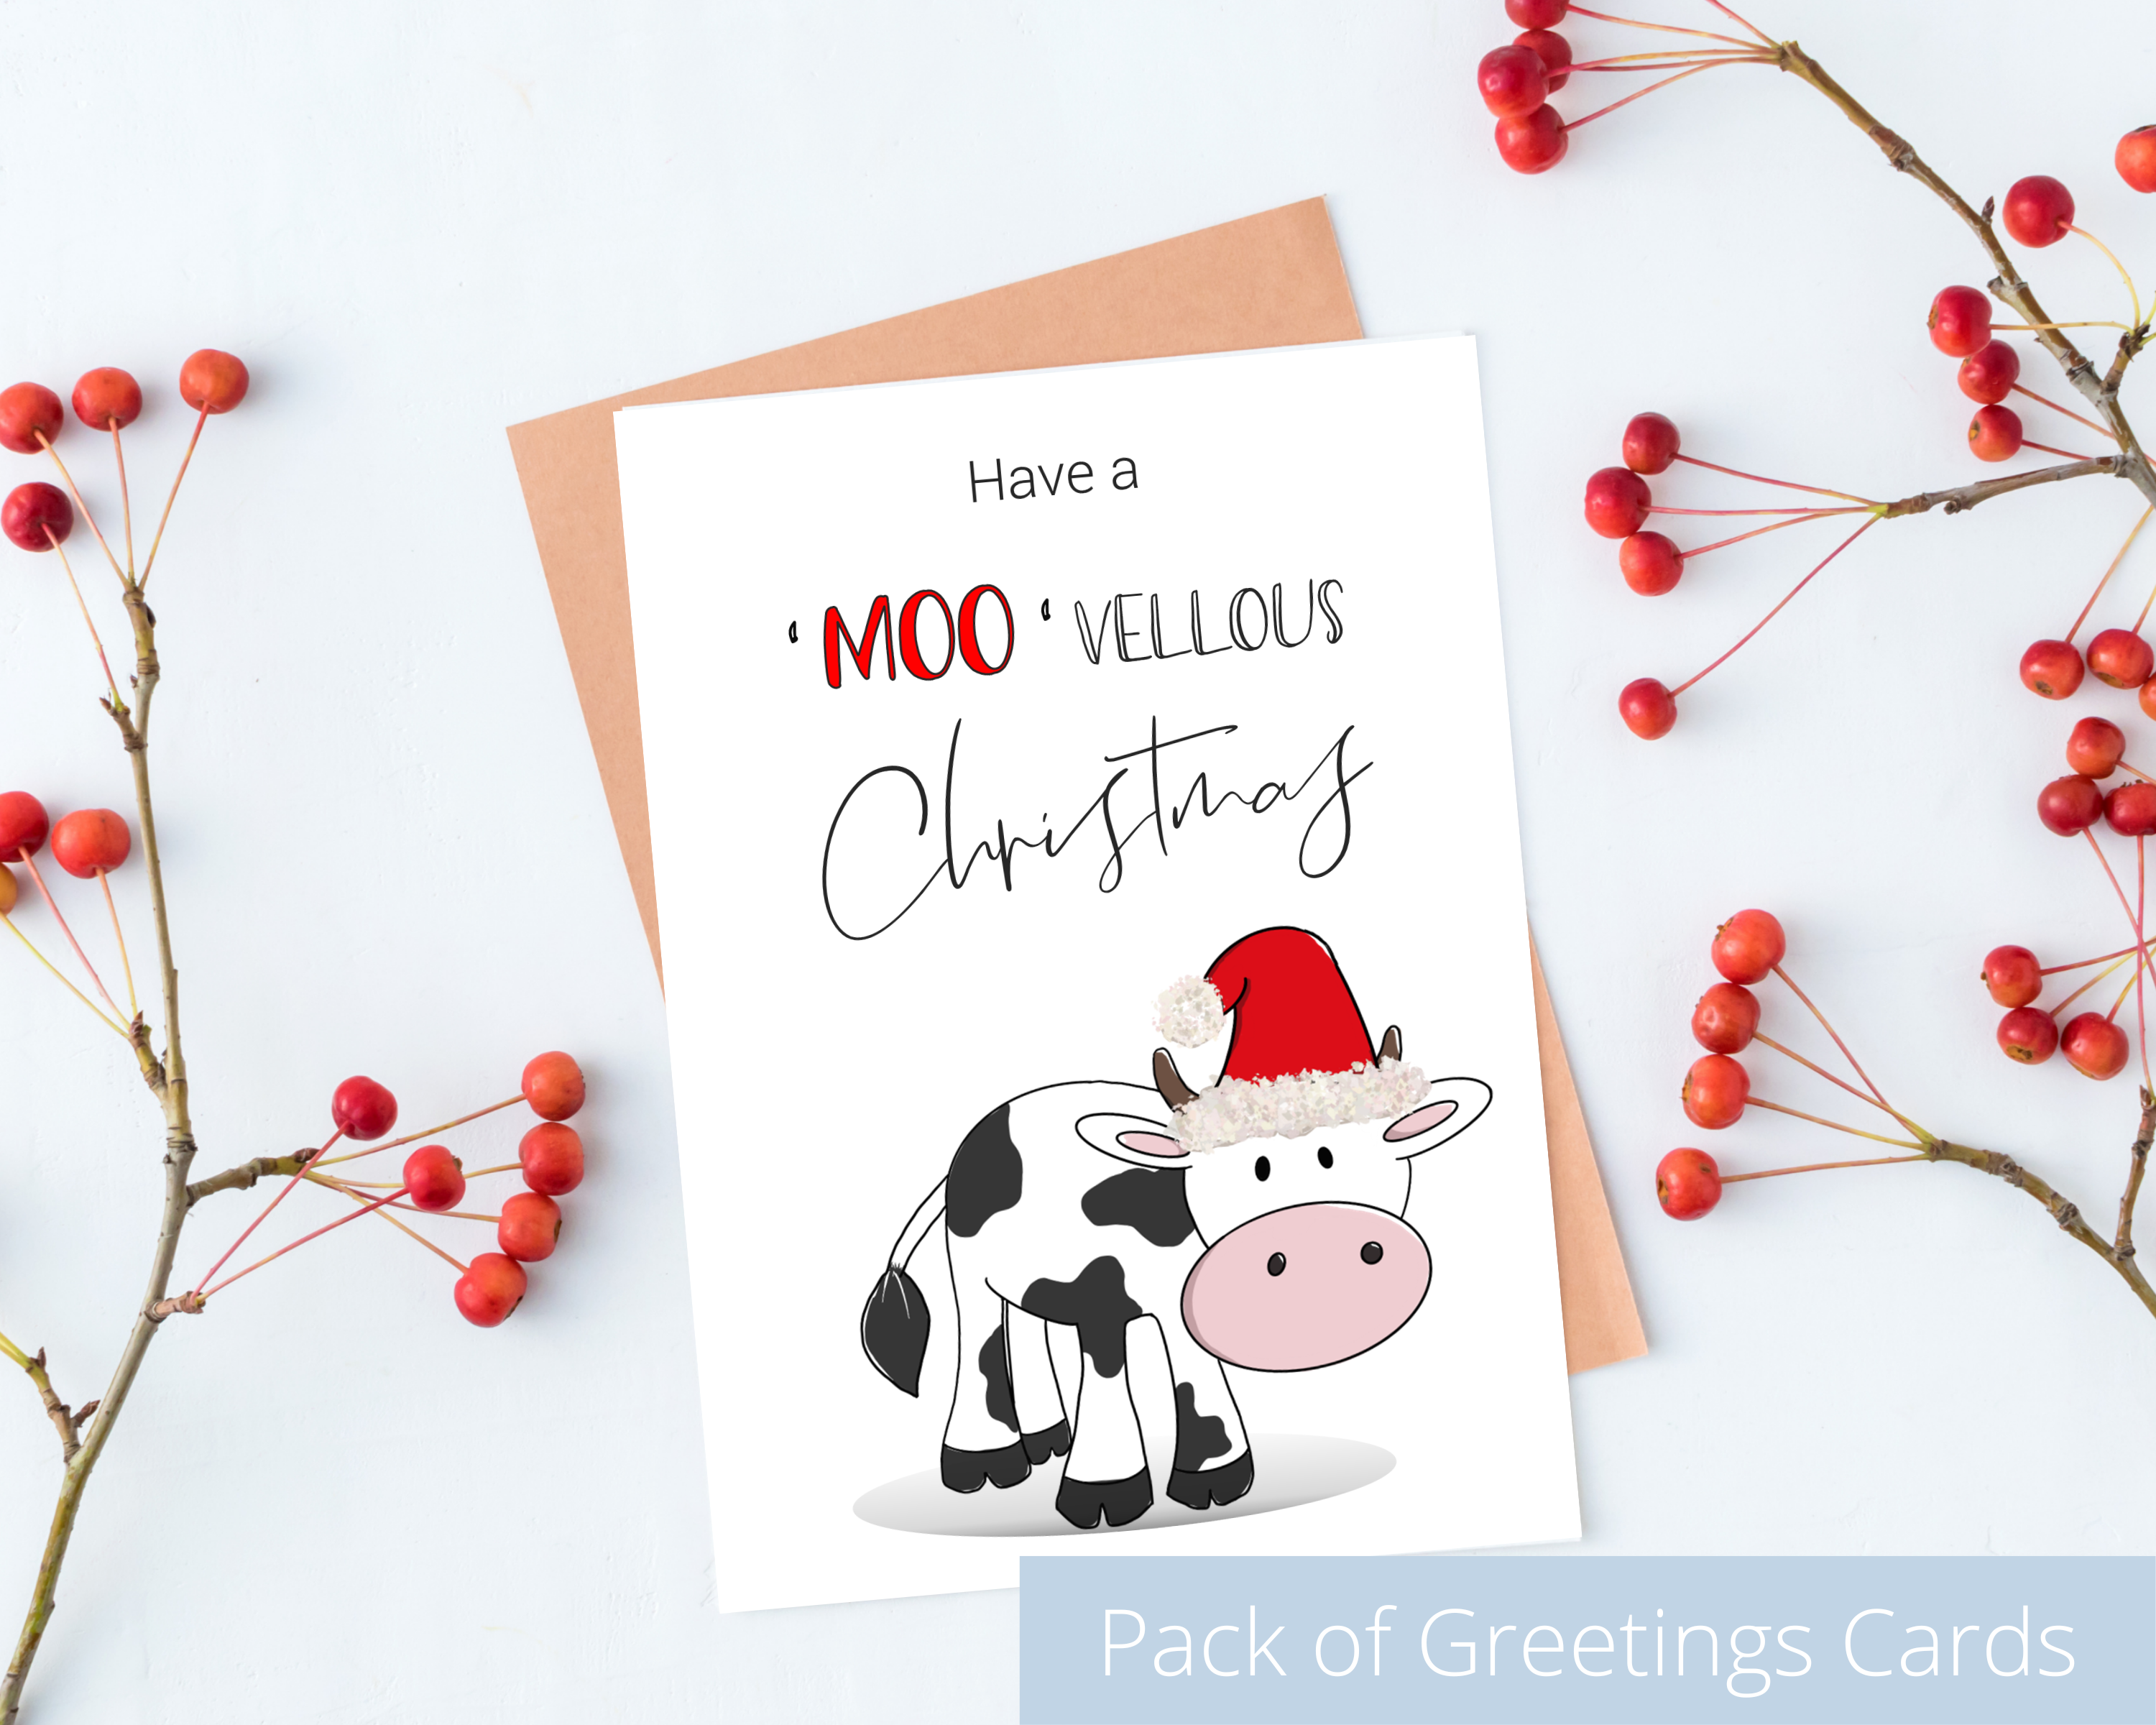 Poppleberry A6 'Moo-vellous Christmas' Christmas Cards on White Cardstock and Kraft brown Envelope.